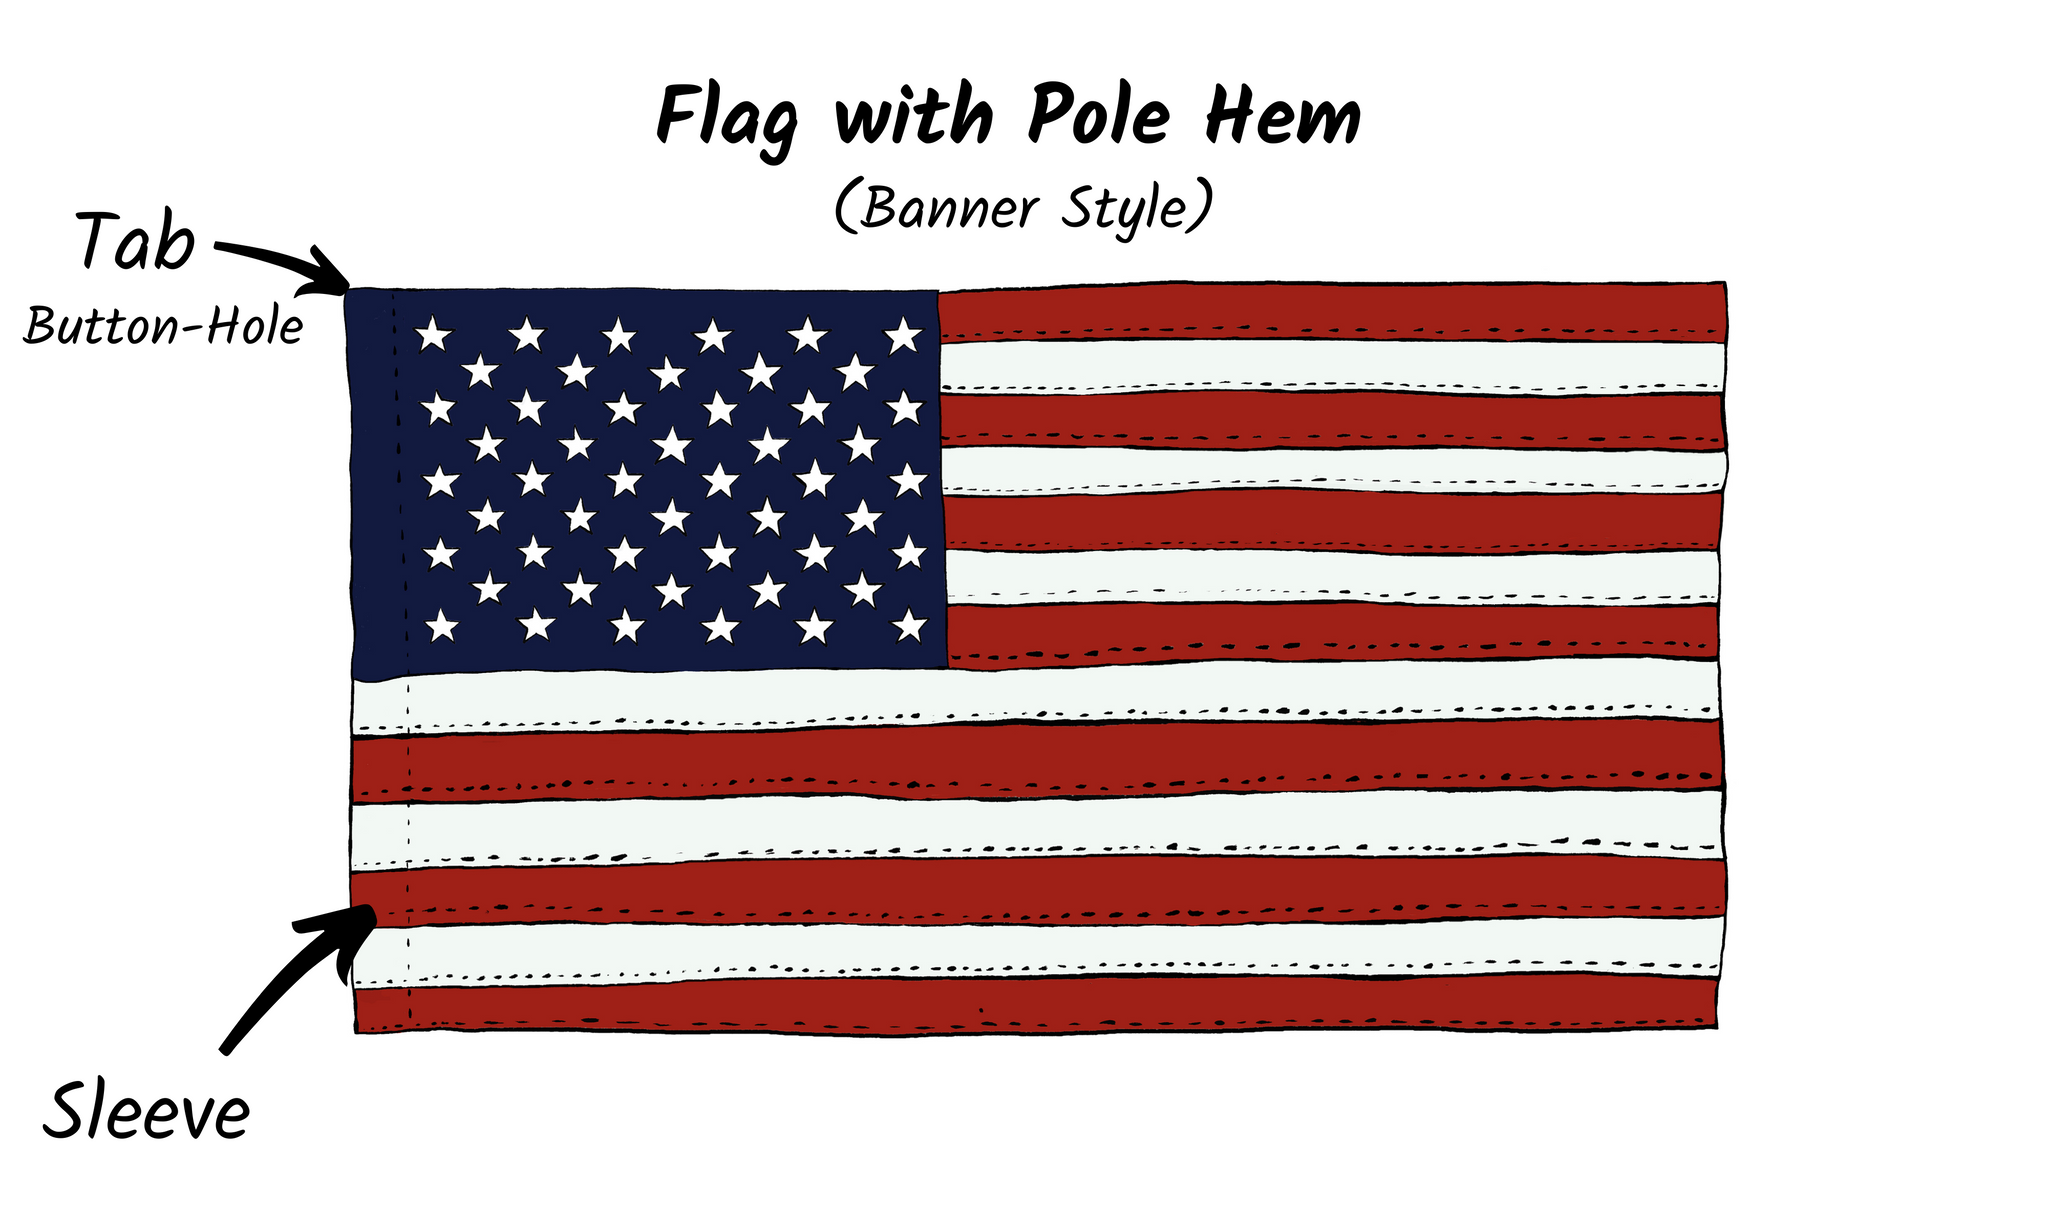 Pole Hem flag illustration with parts